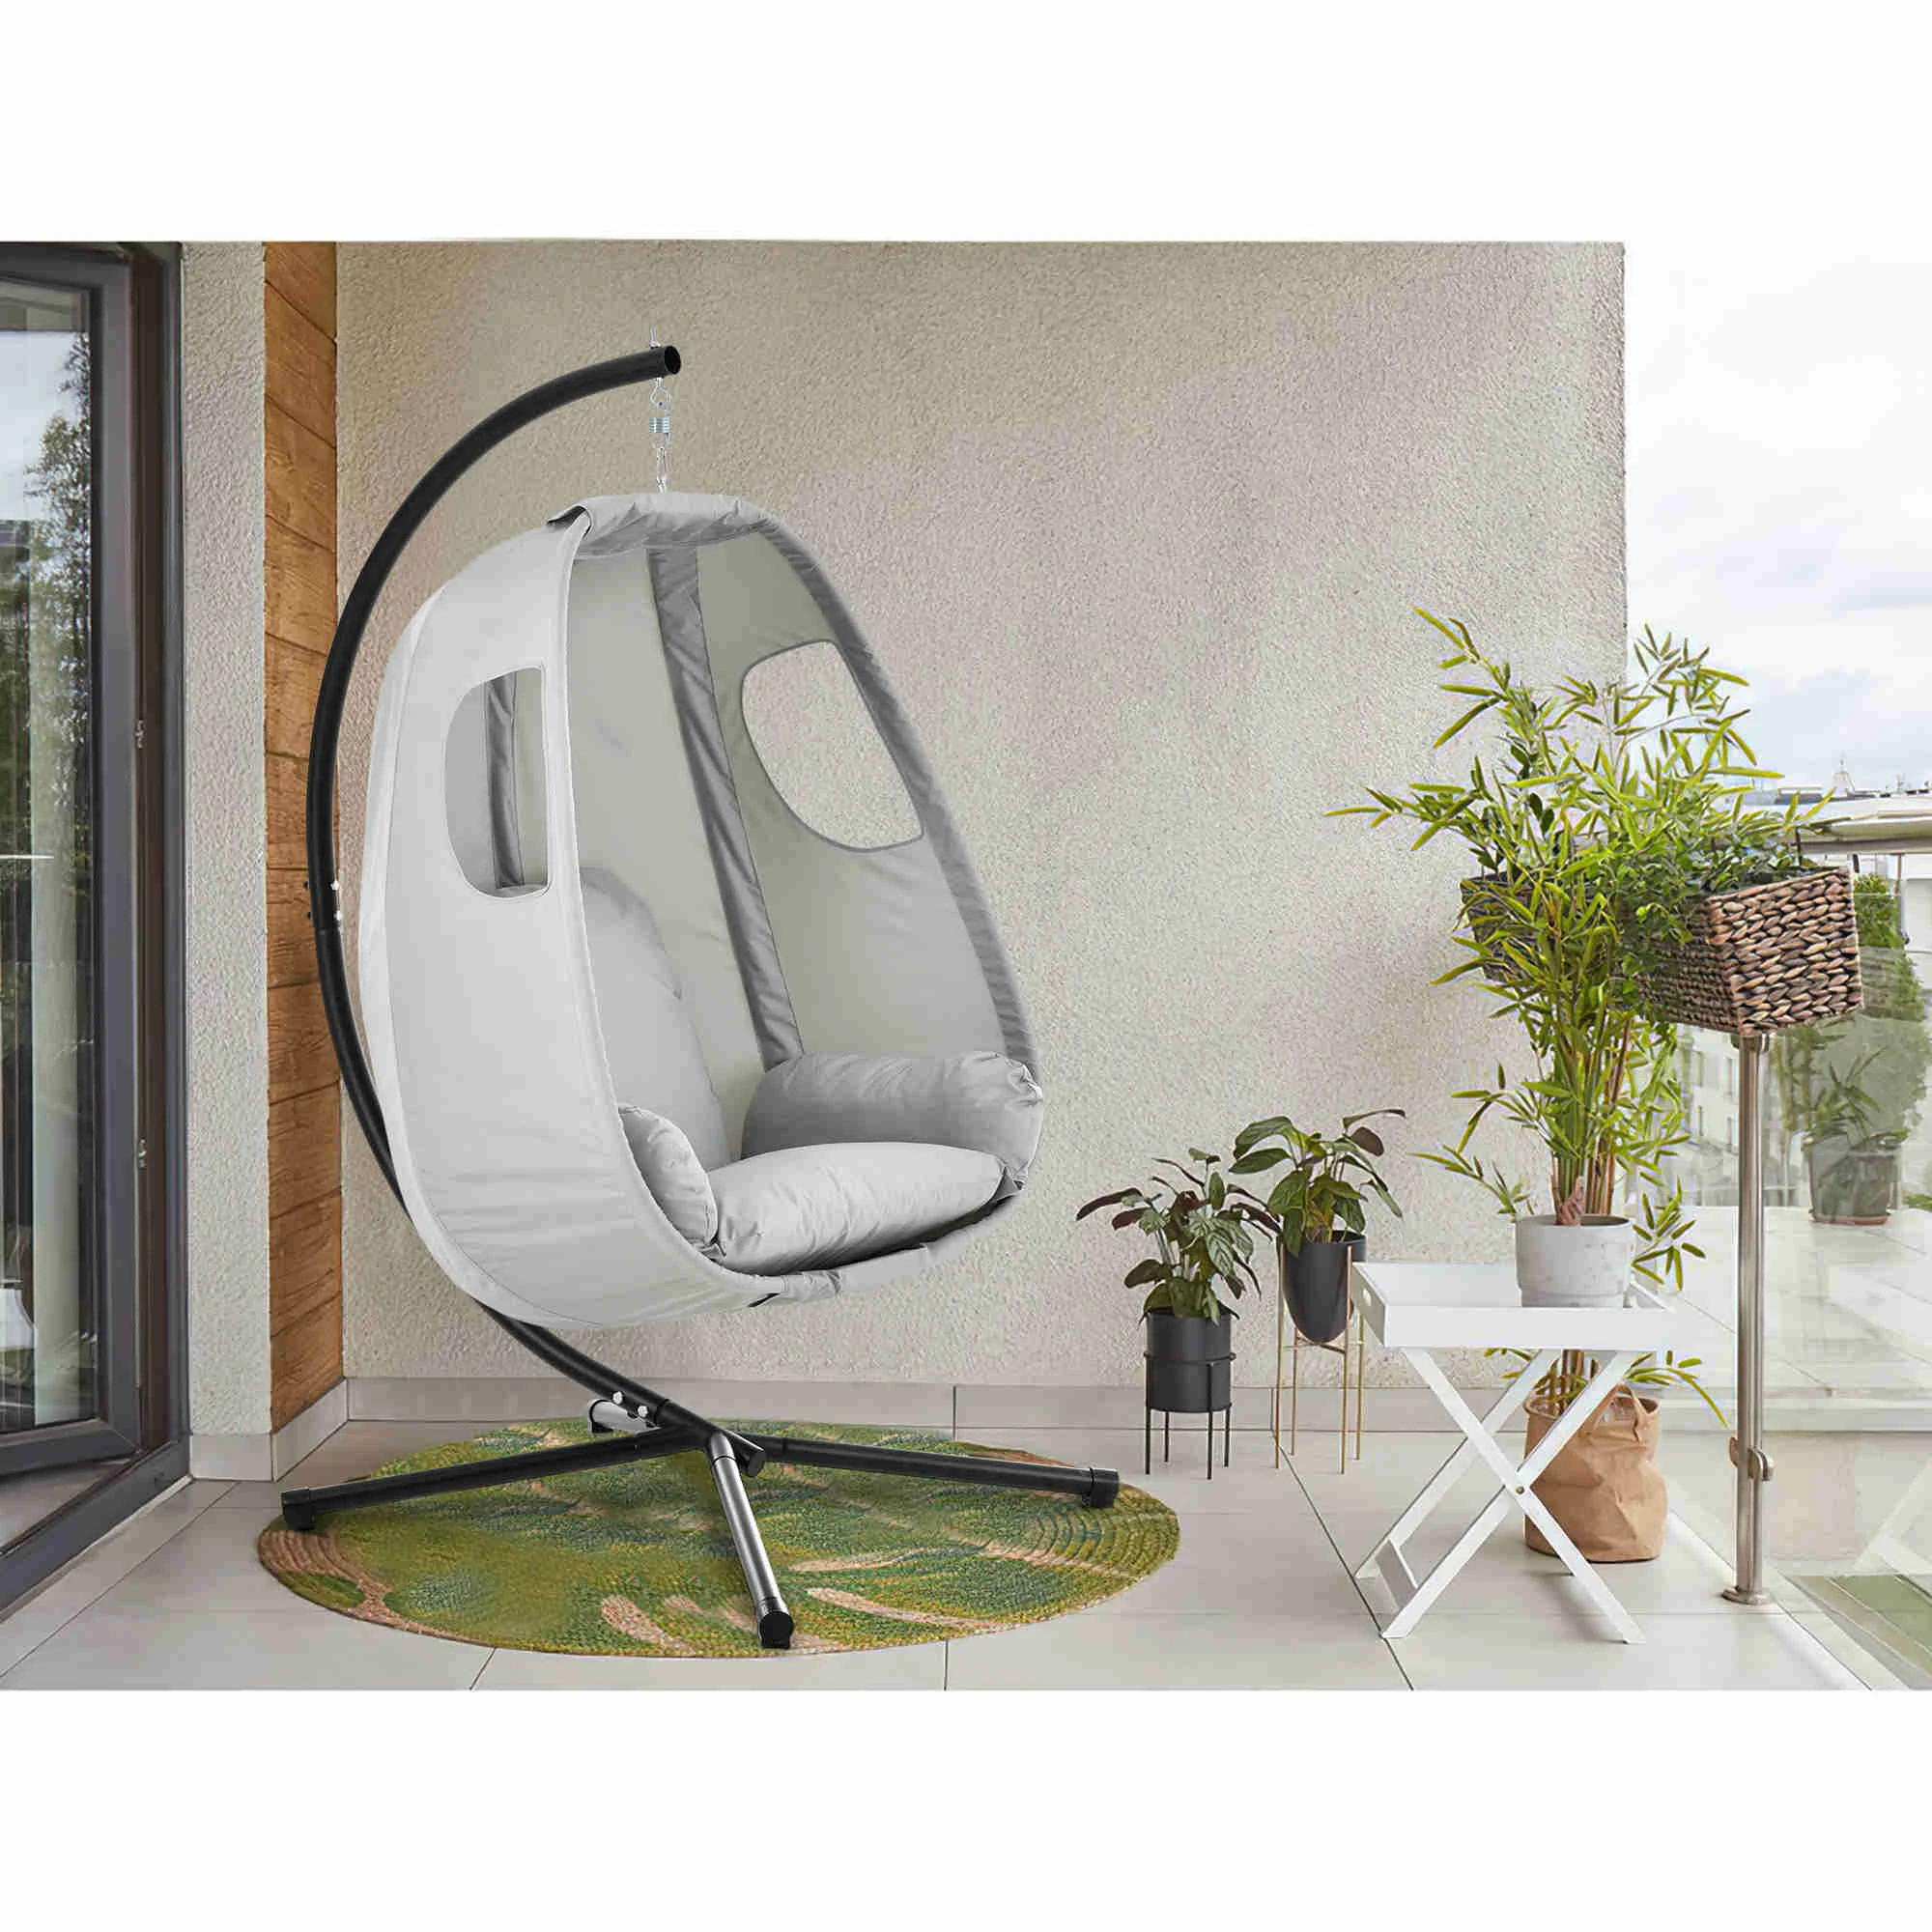 Swing Egg Chair, X-shaped Hanging Chair, Hammock Chair Stand Set, Indoor  And Outdoor Hammock Chair With Cushion, Light Grey - Garden Chairs -  AliExpress